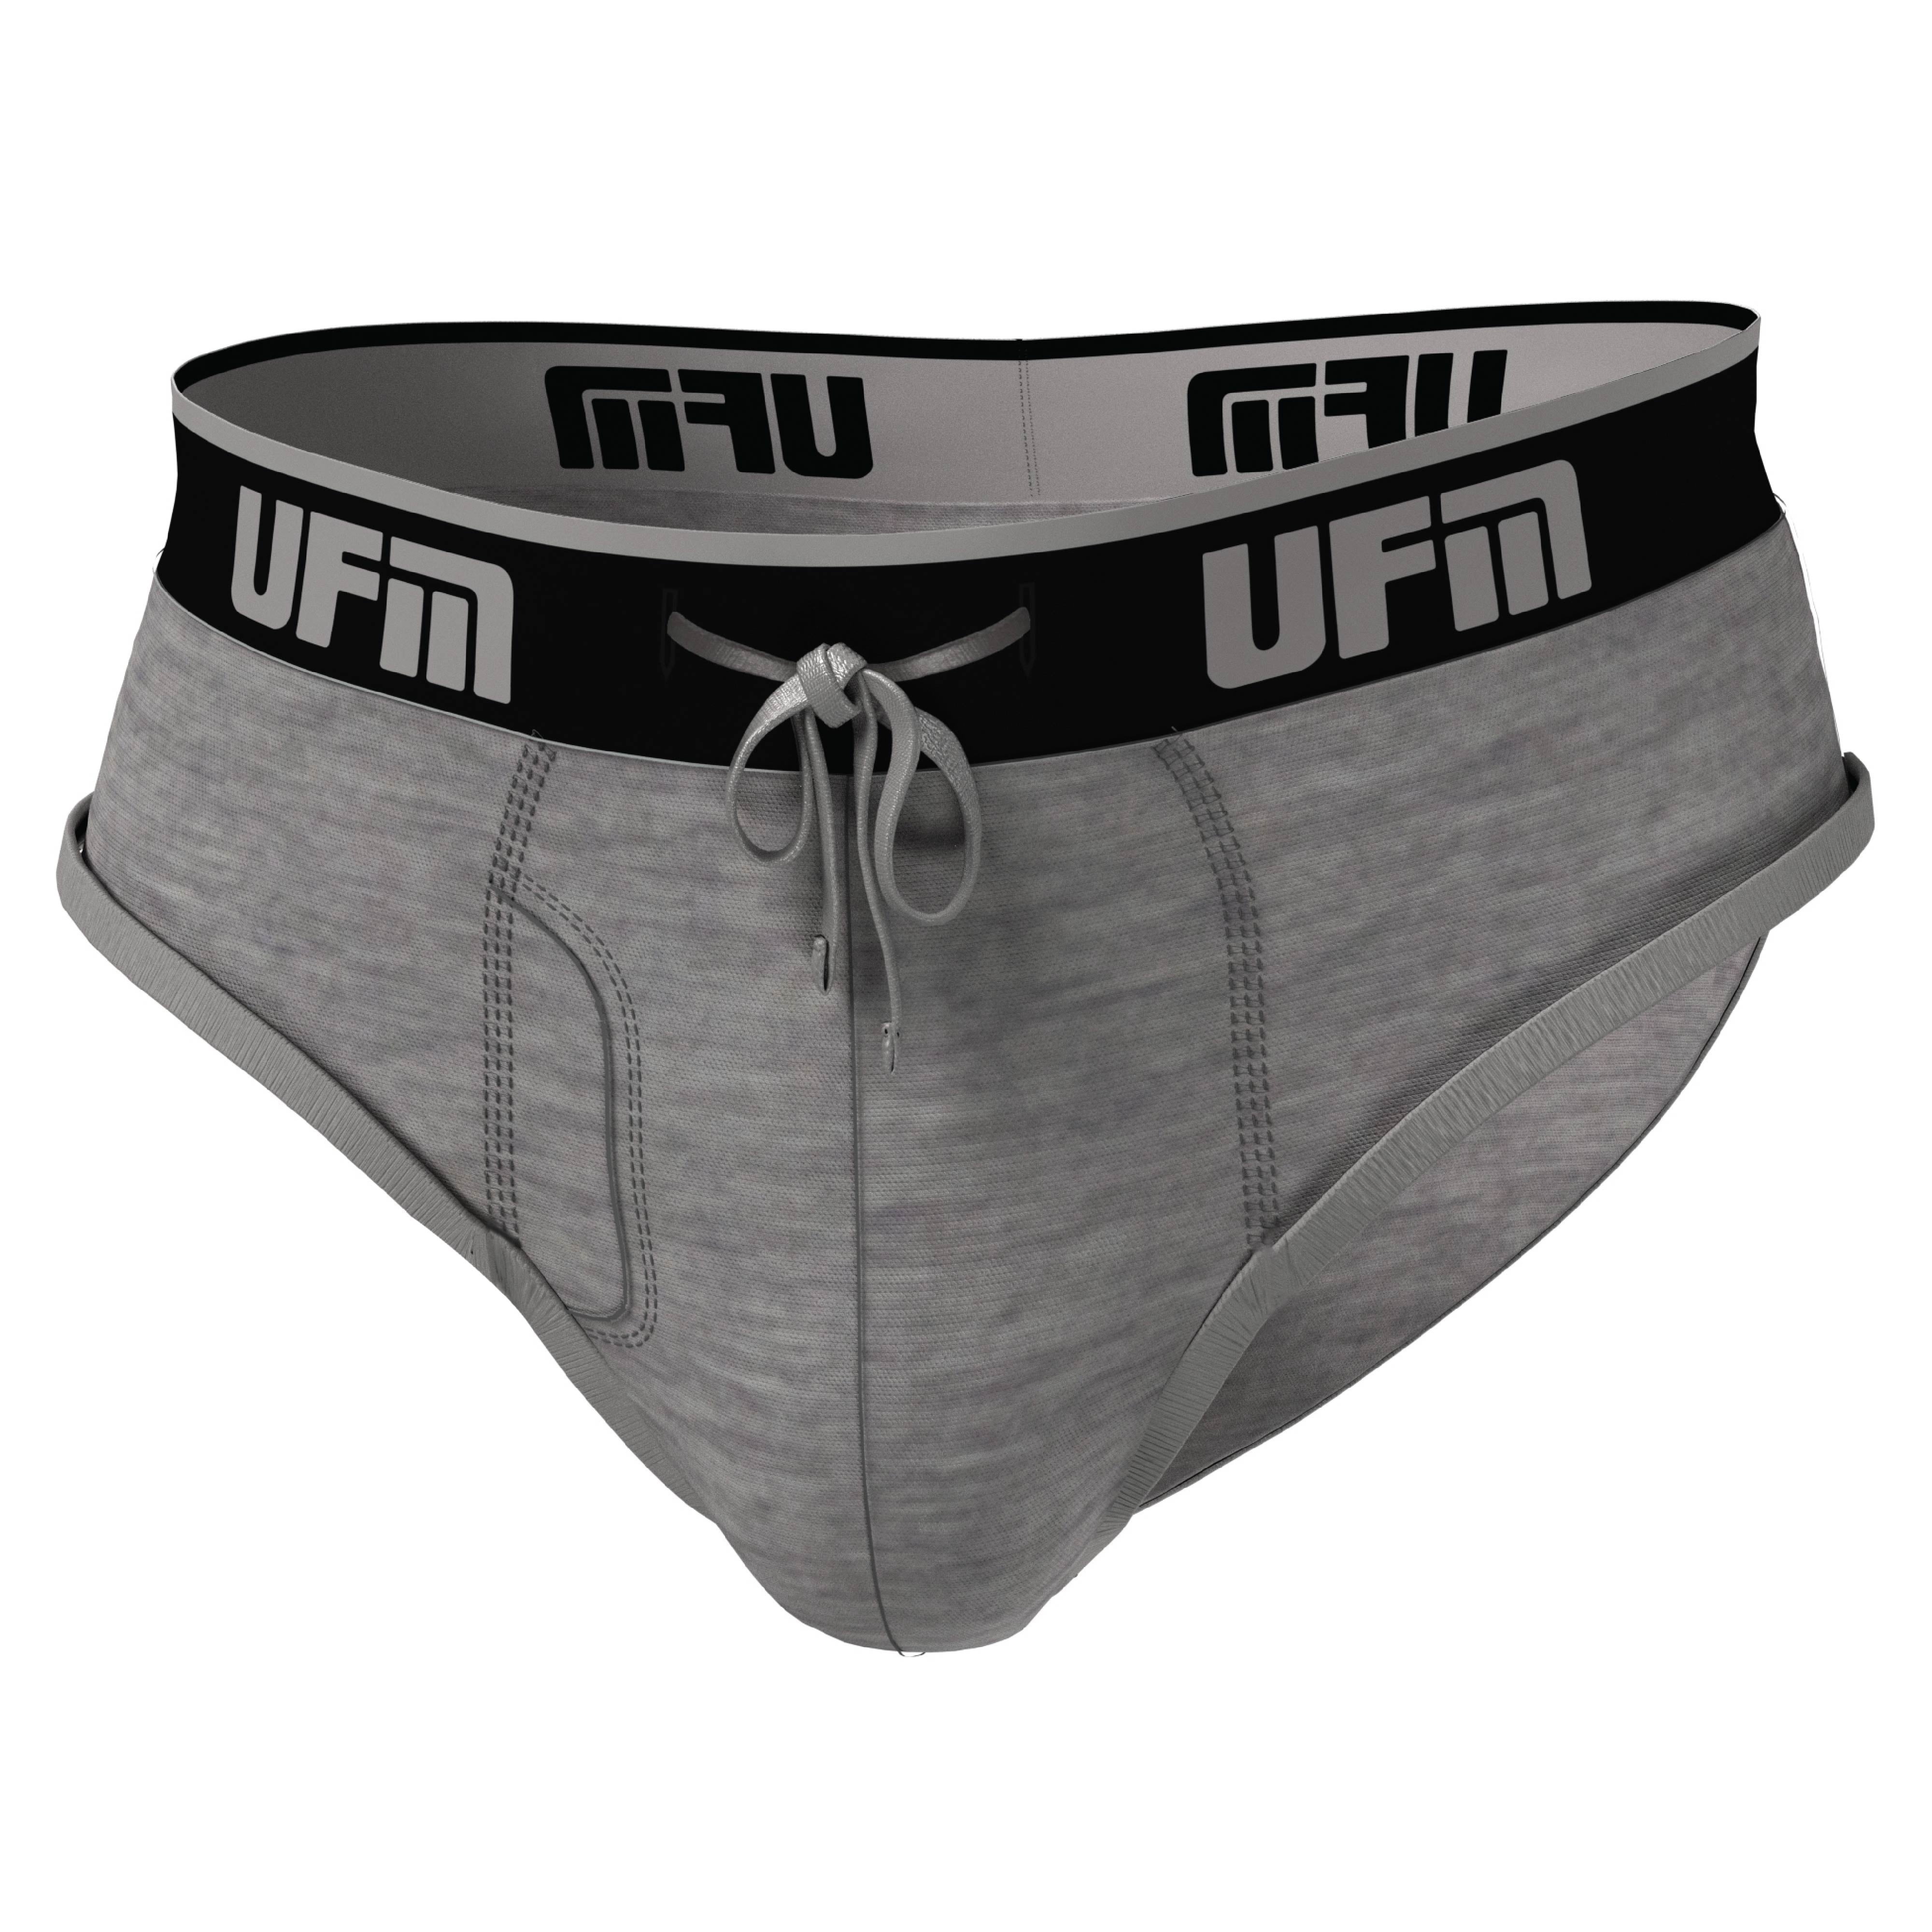 Moisture Wicking Underwear Explained By UFM